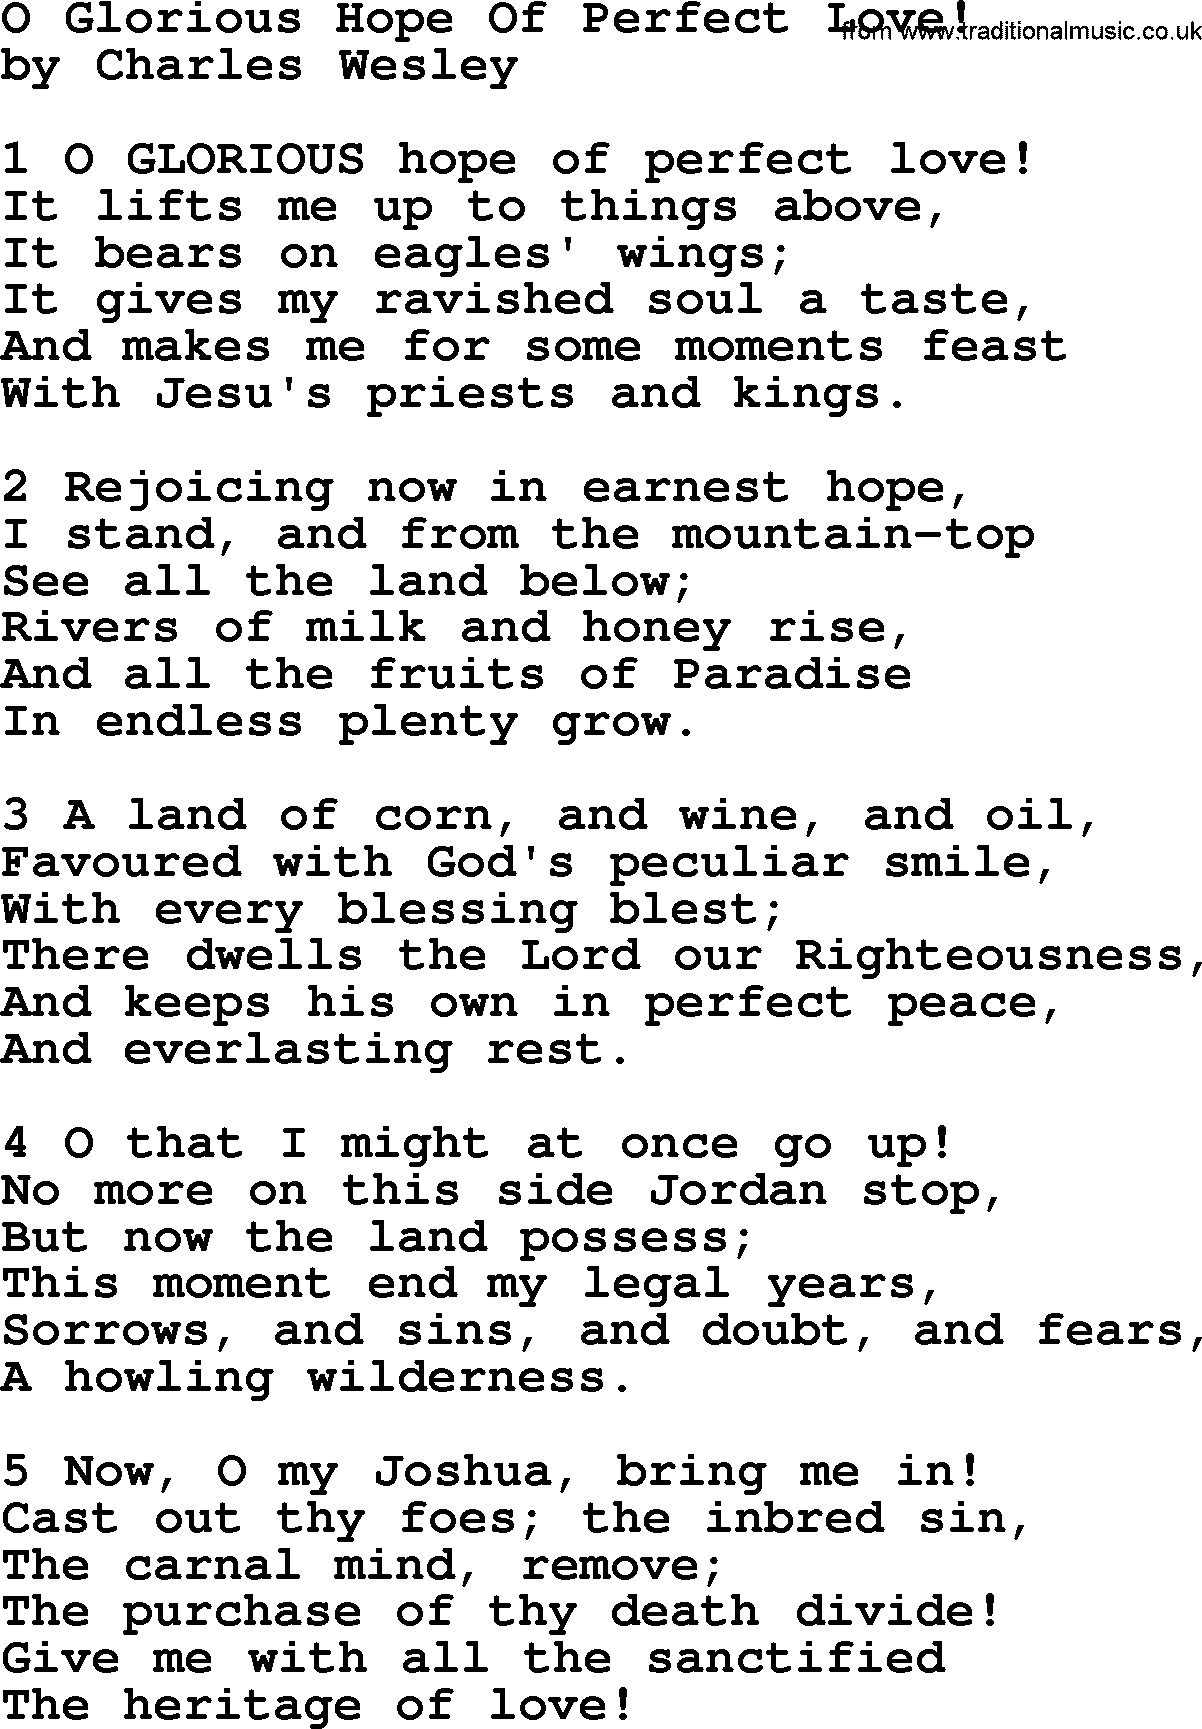 Charles Wesley hymn: O Glorious Hope Of Perfect Love!, lyrics